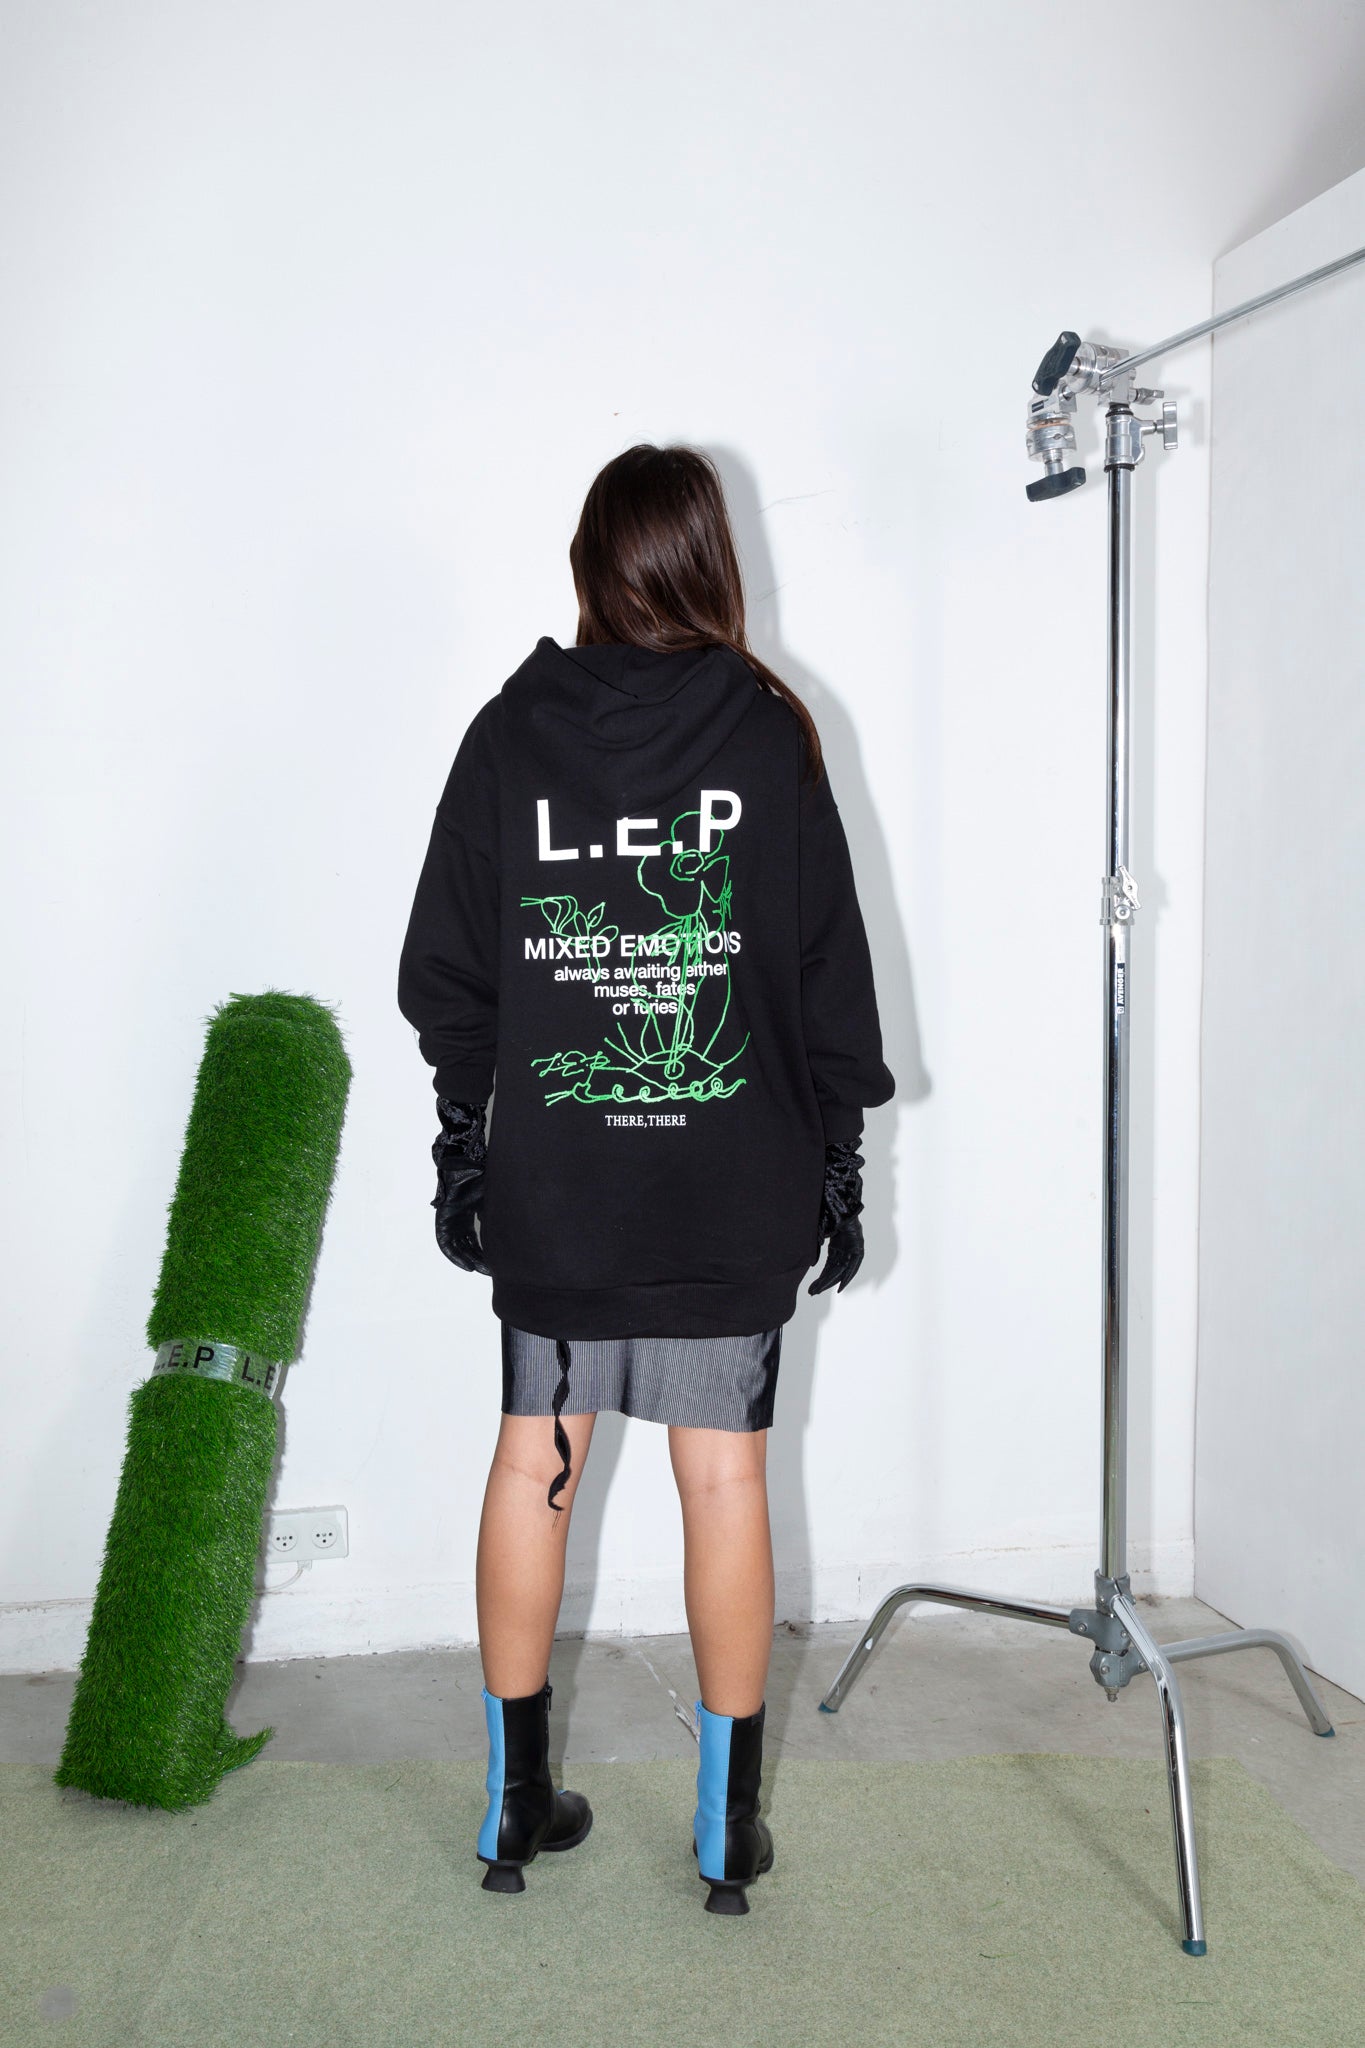 L.E.P mixed emotions Black hoodie